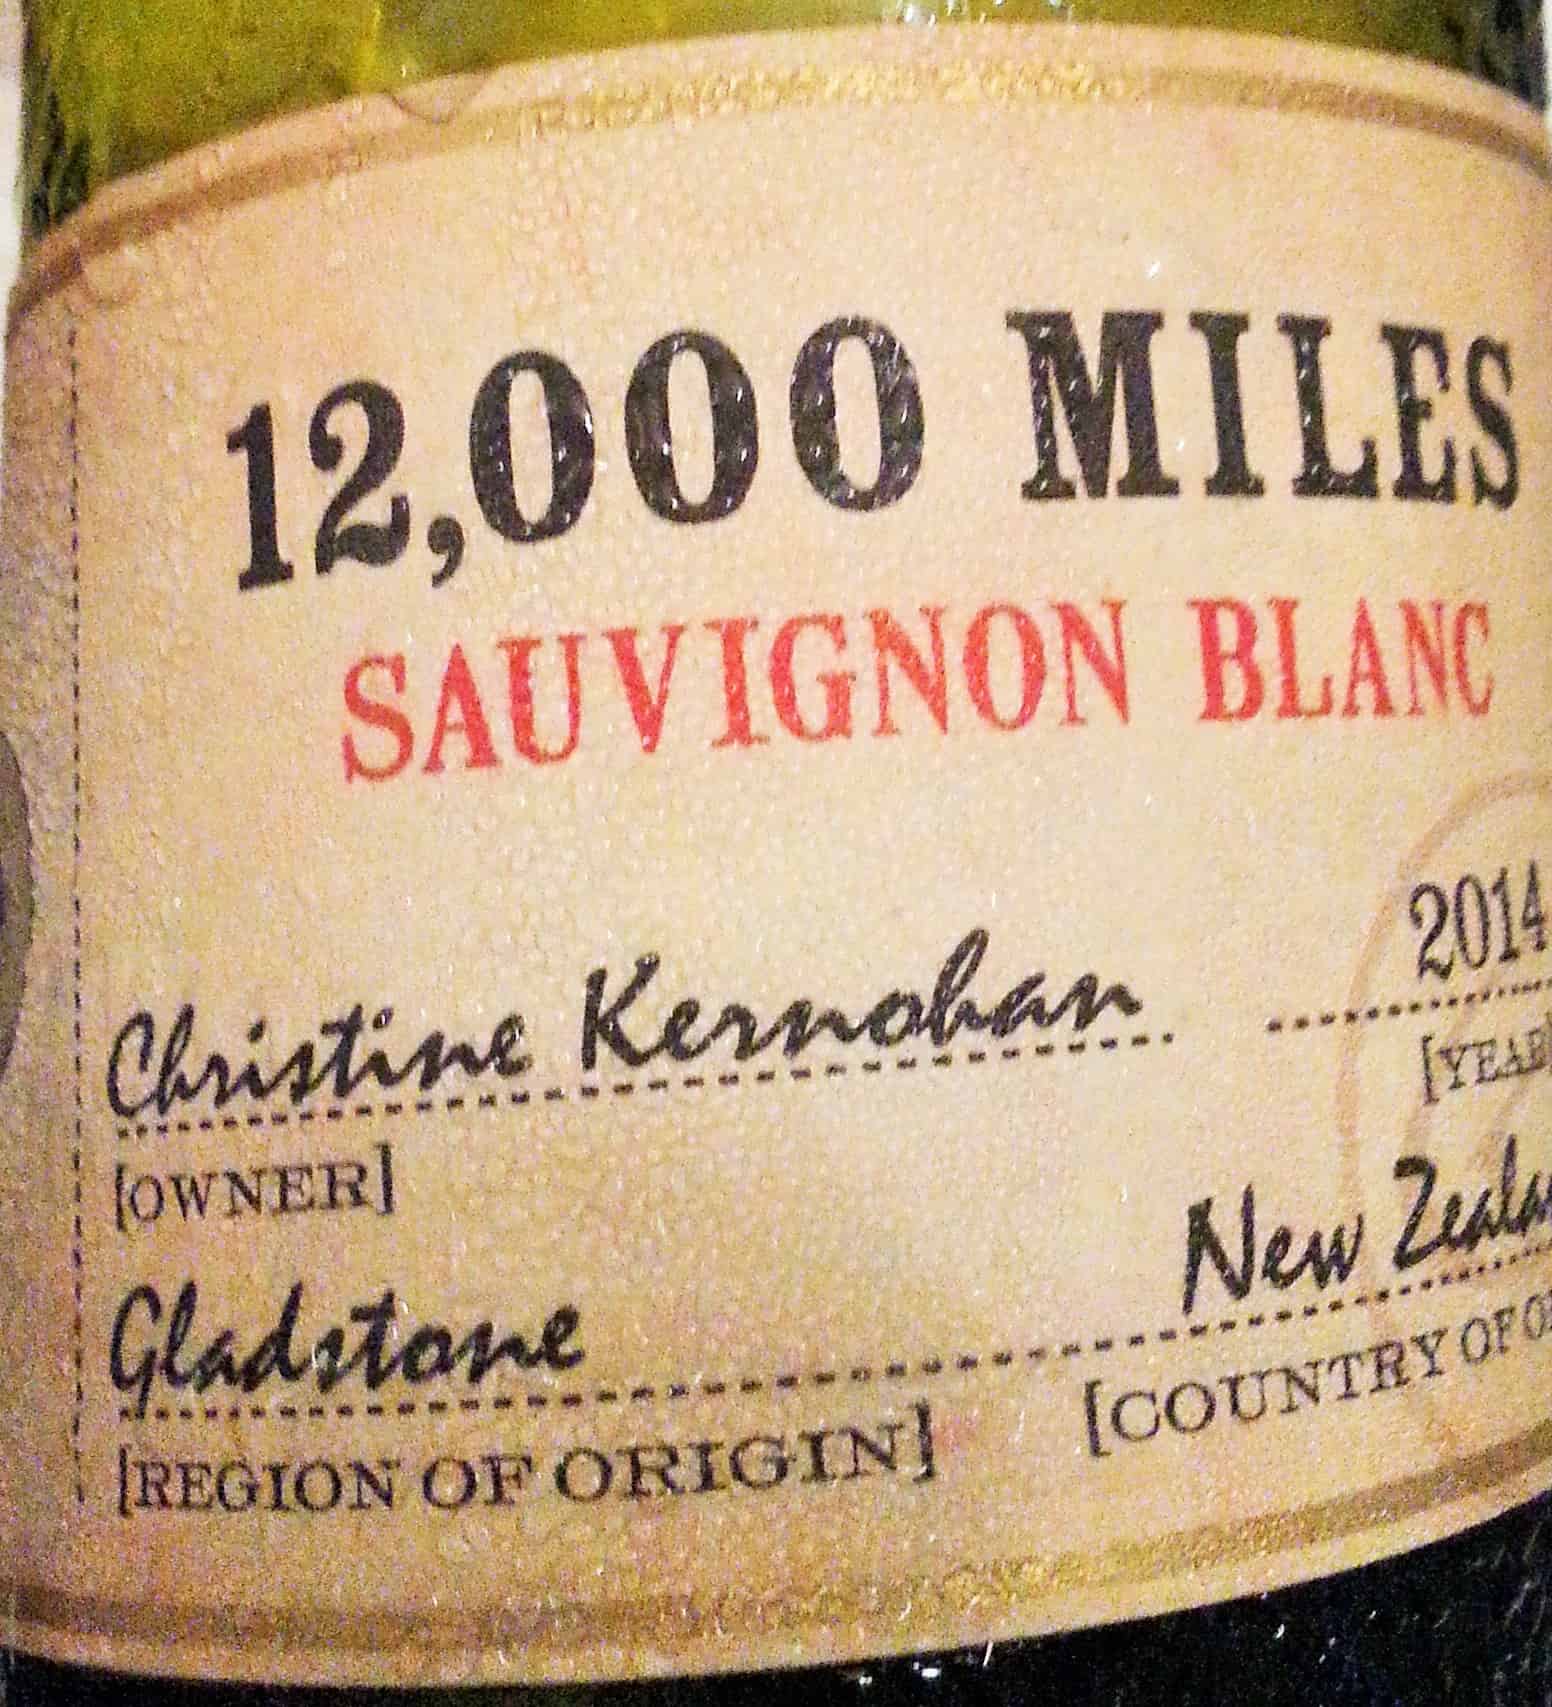 12,000 Miles Sauvignon Blanc 2014